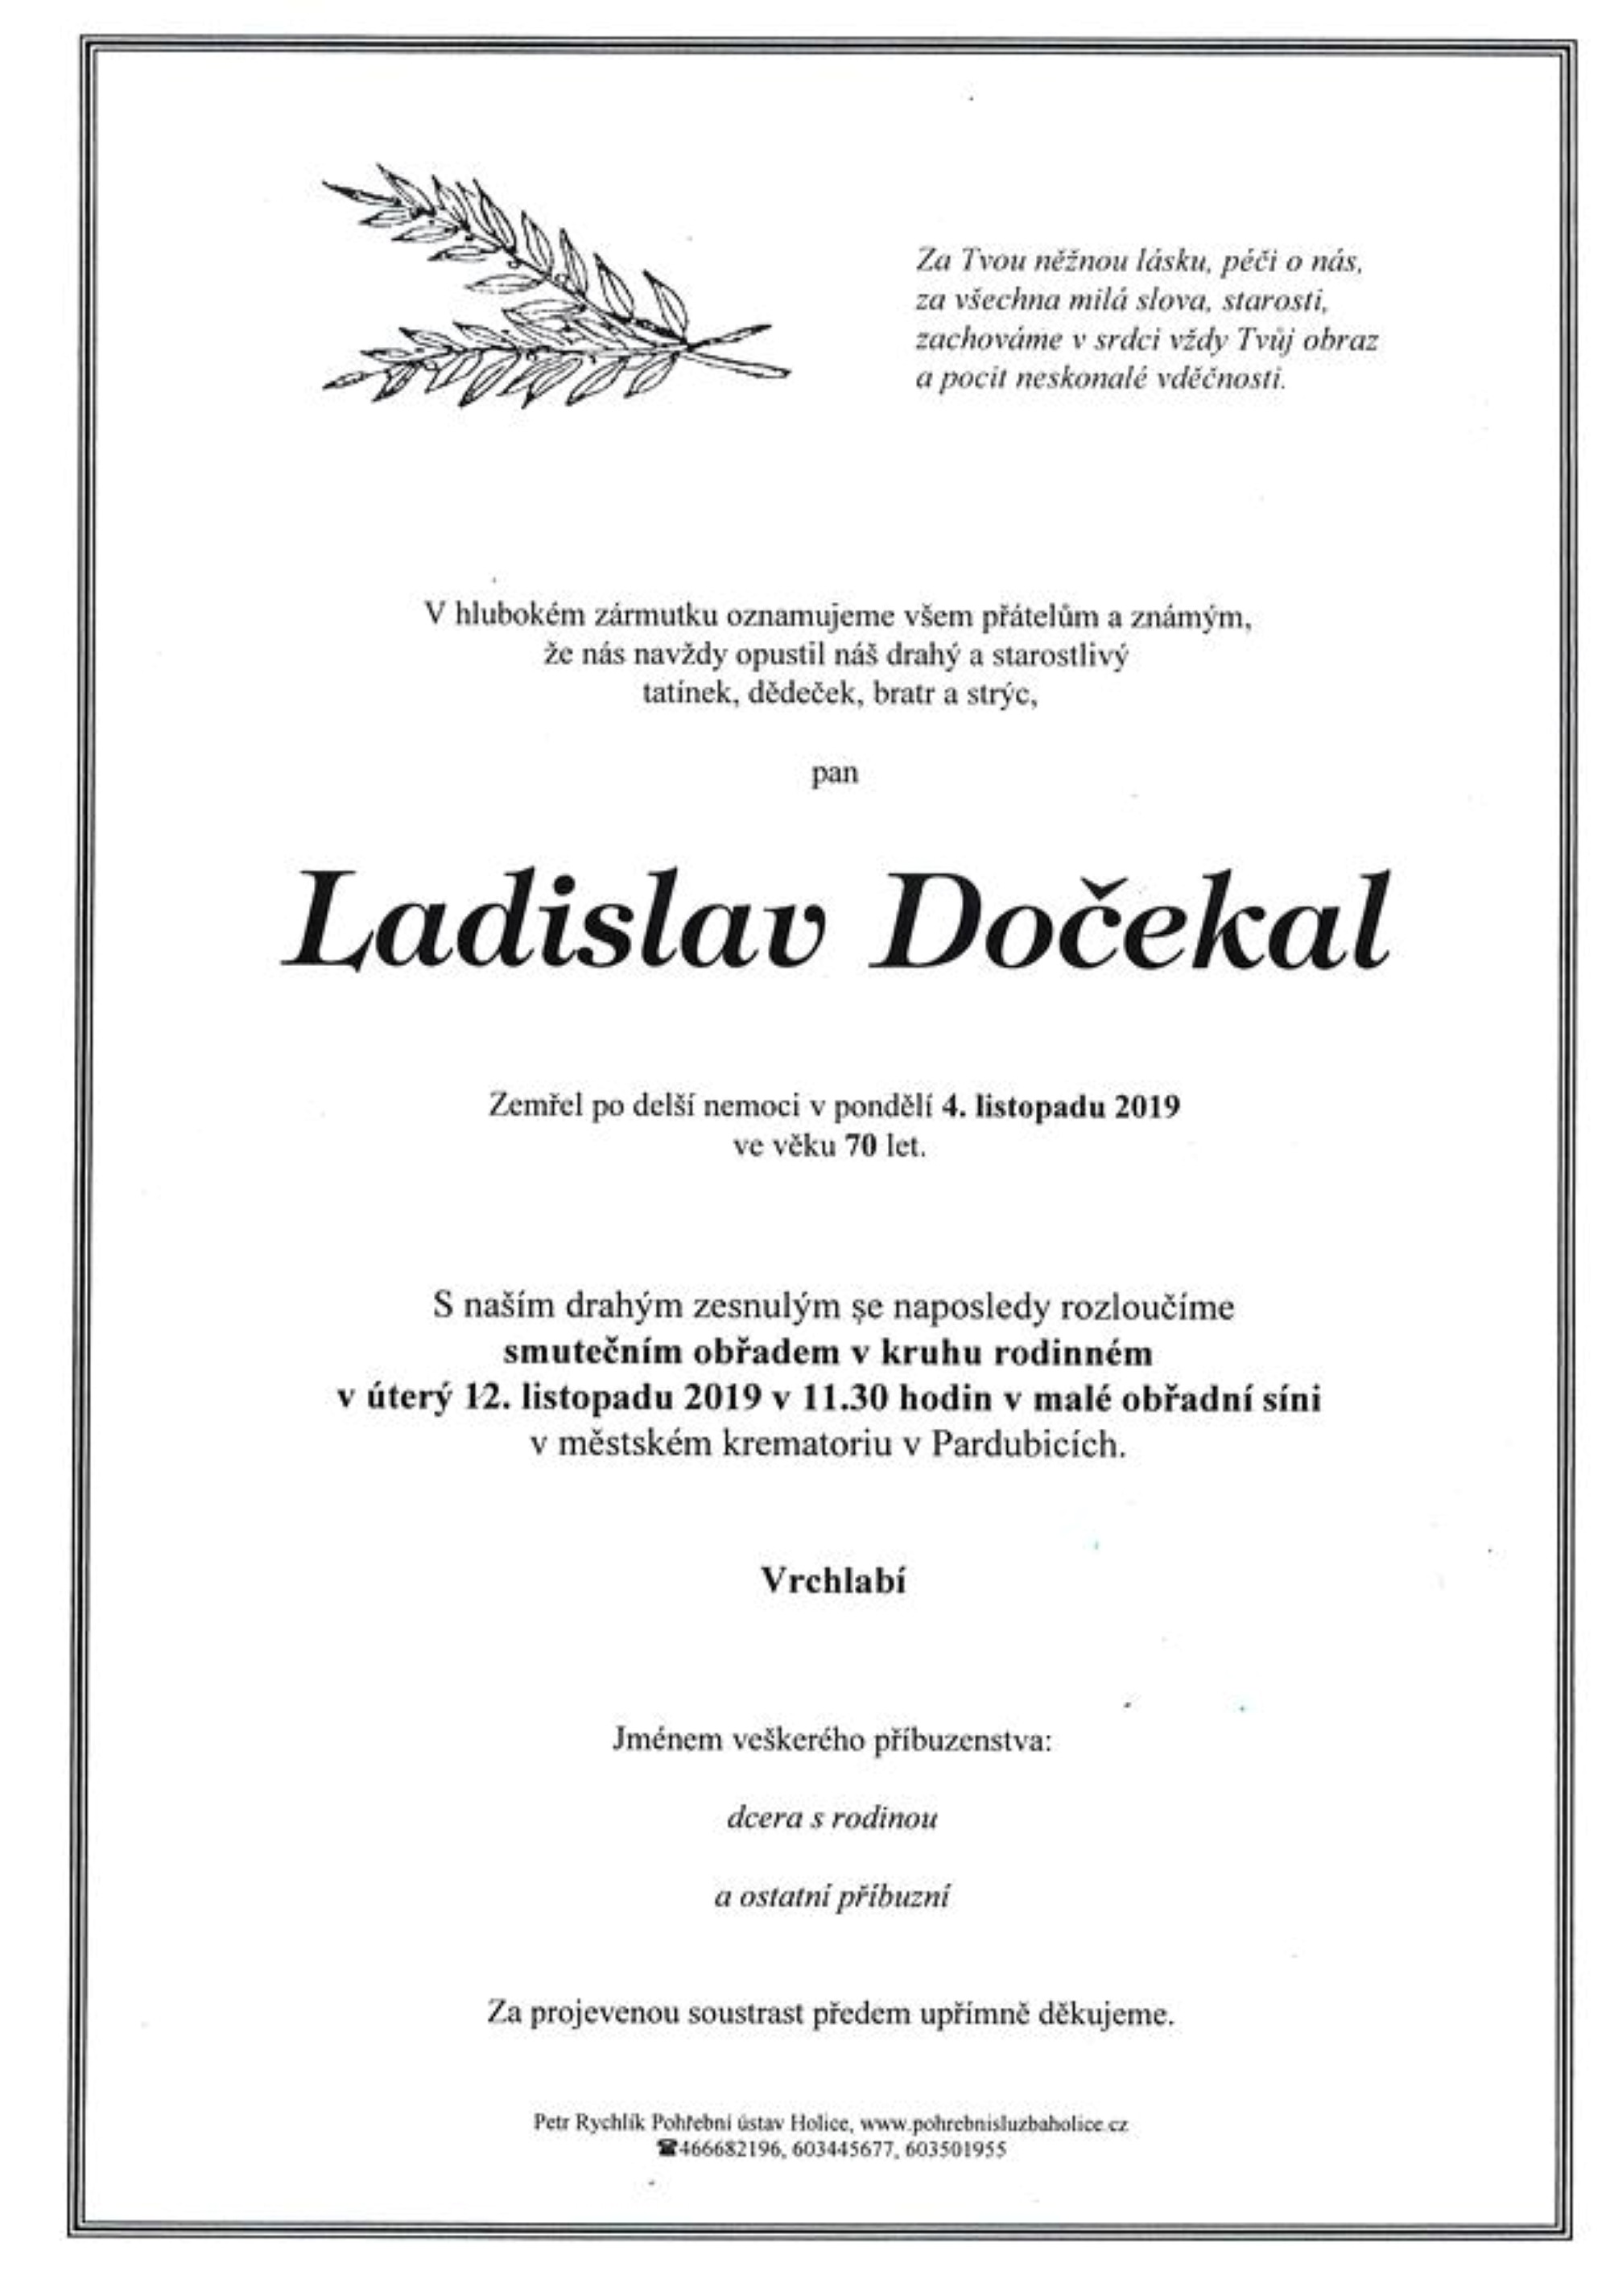 Ladislav Dočekal